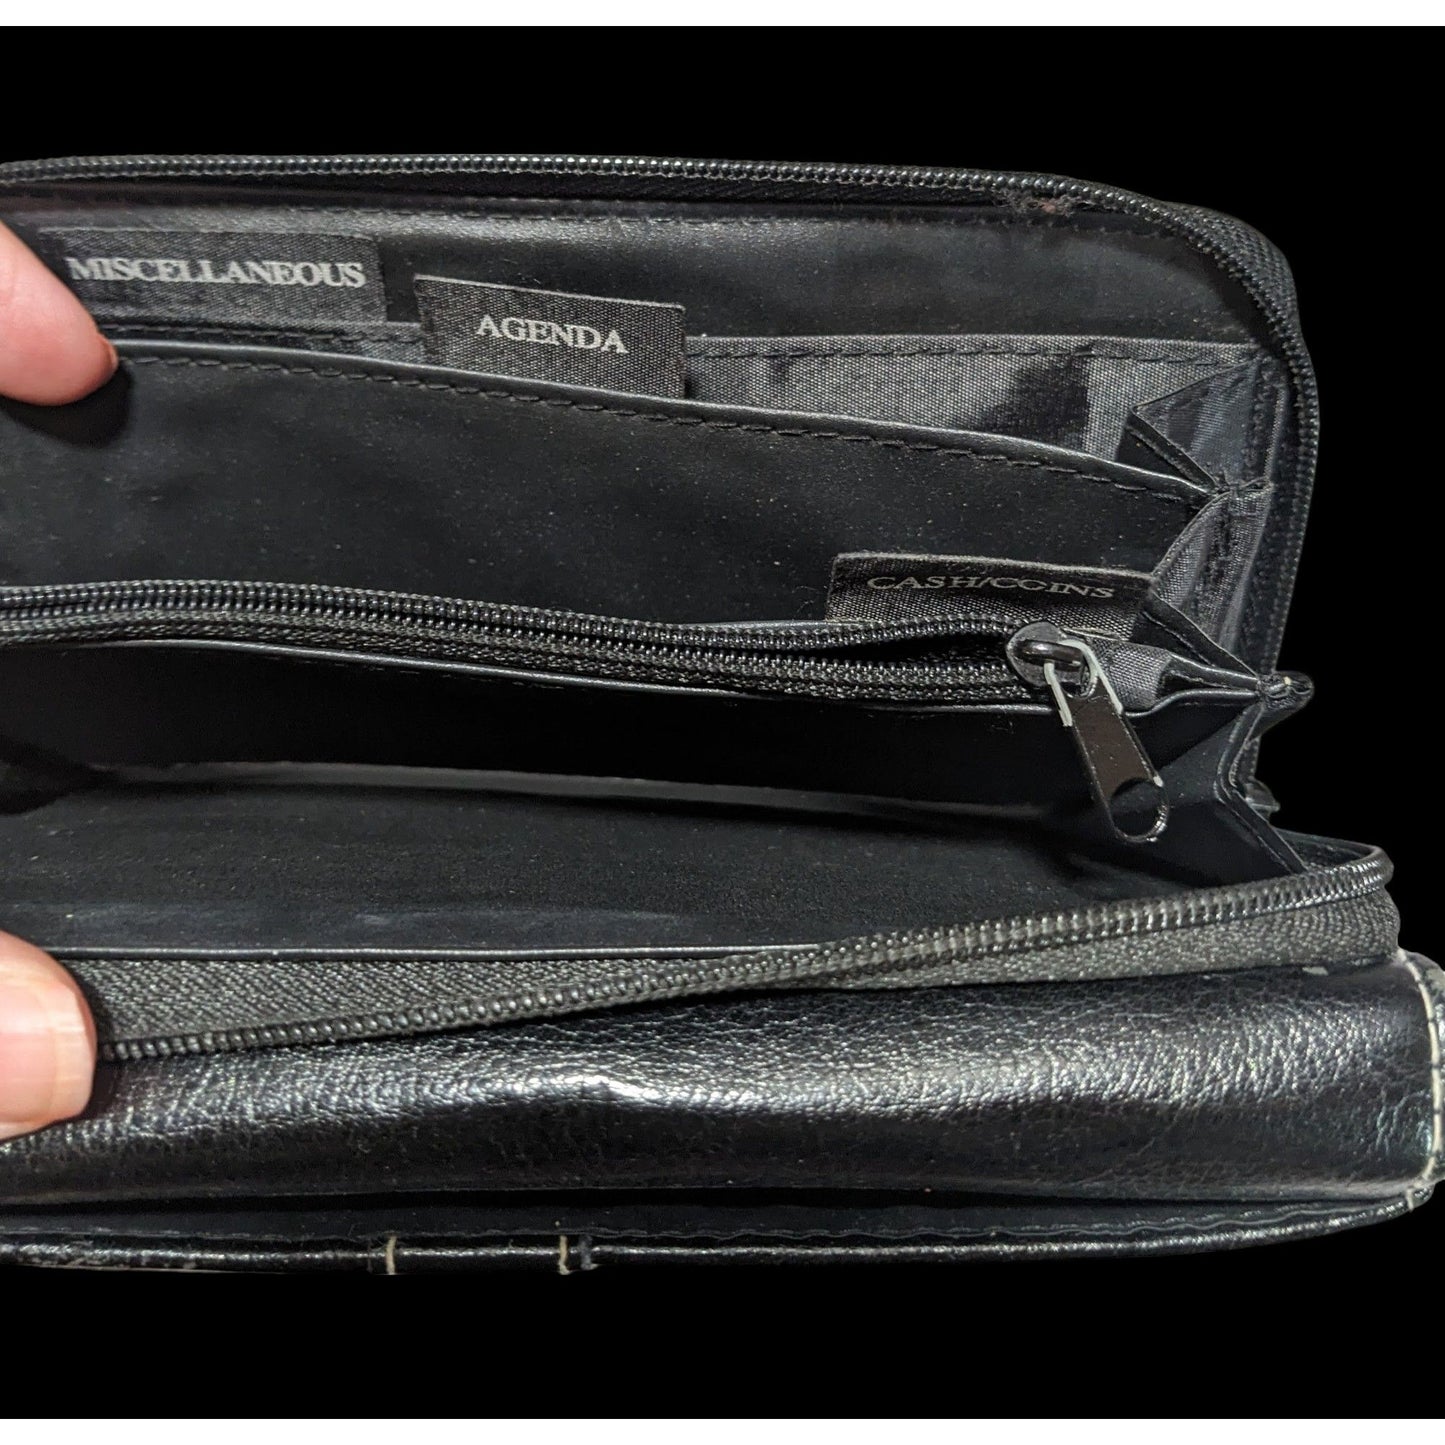 Black Trifold Wallet